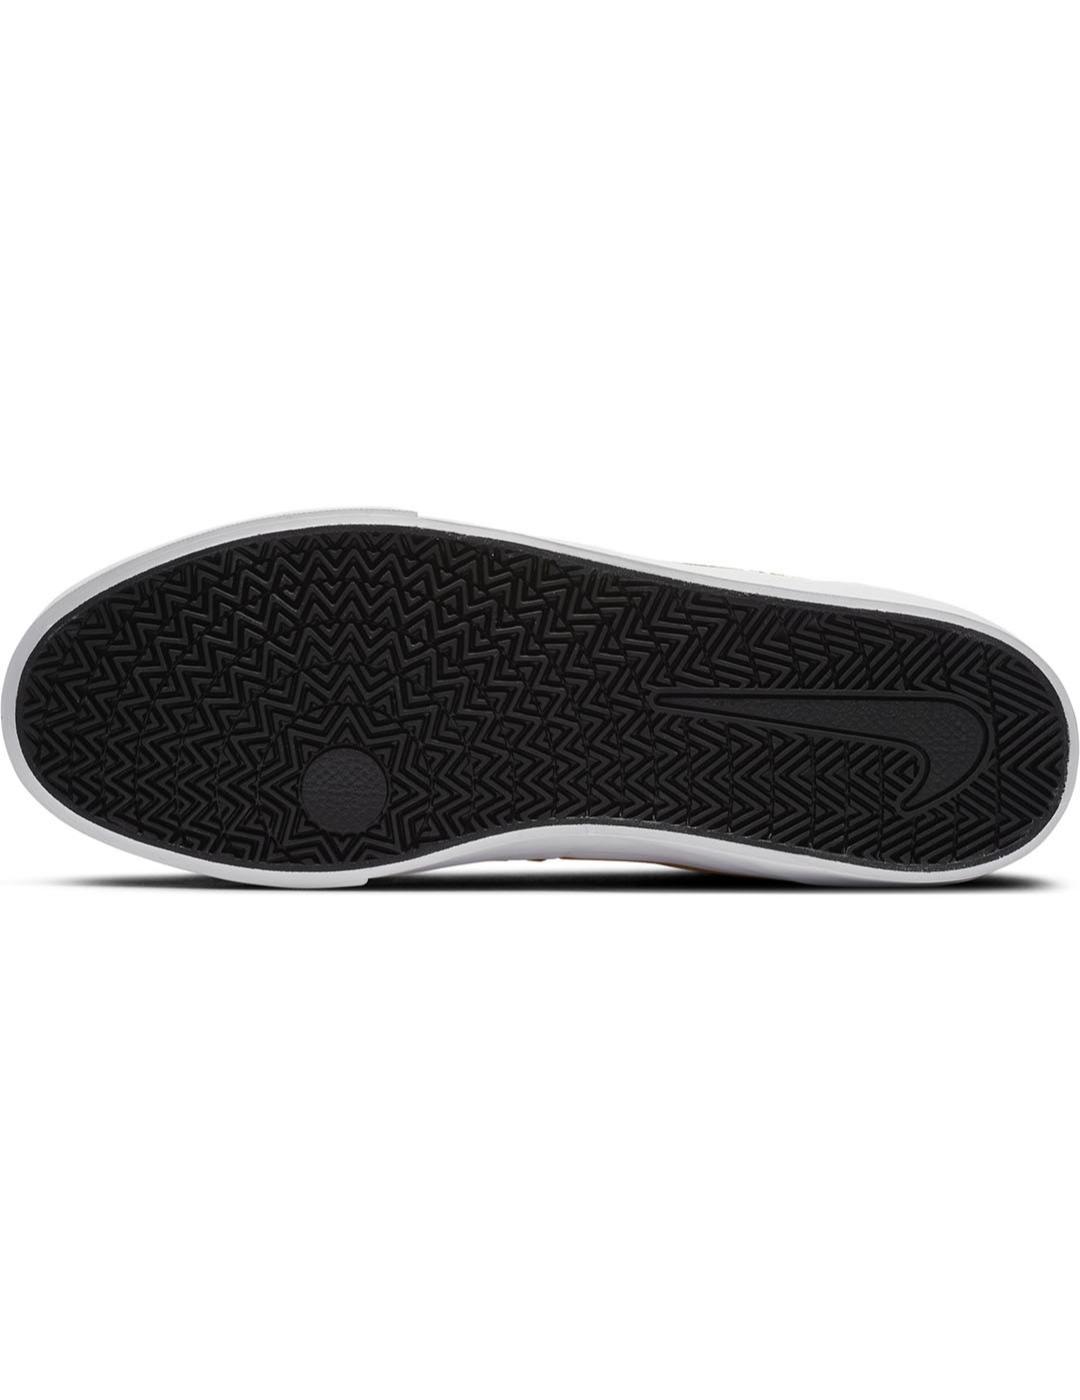 Nike SB Zapatillas Sin Cordones Charge Premium Negro